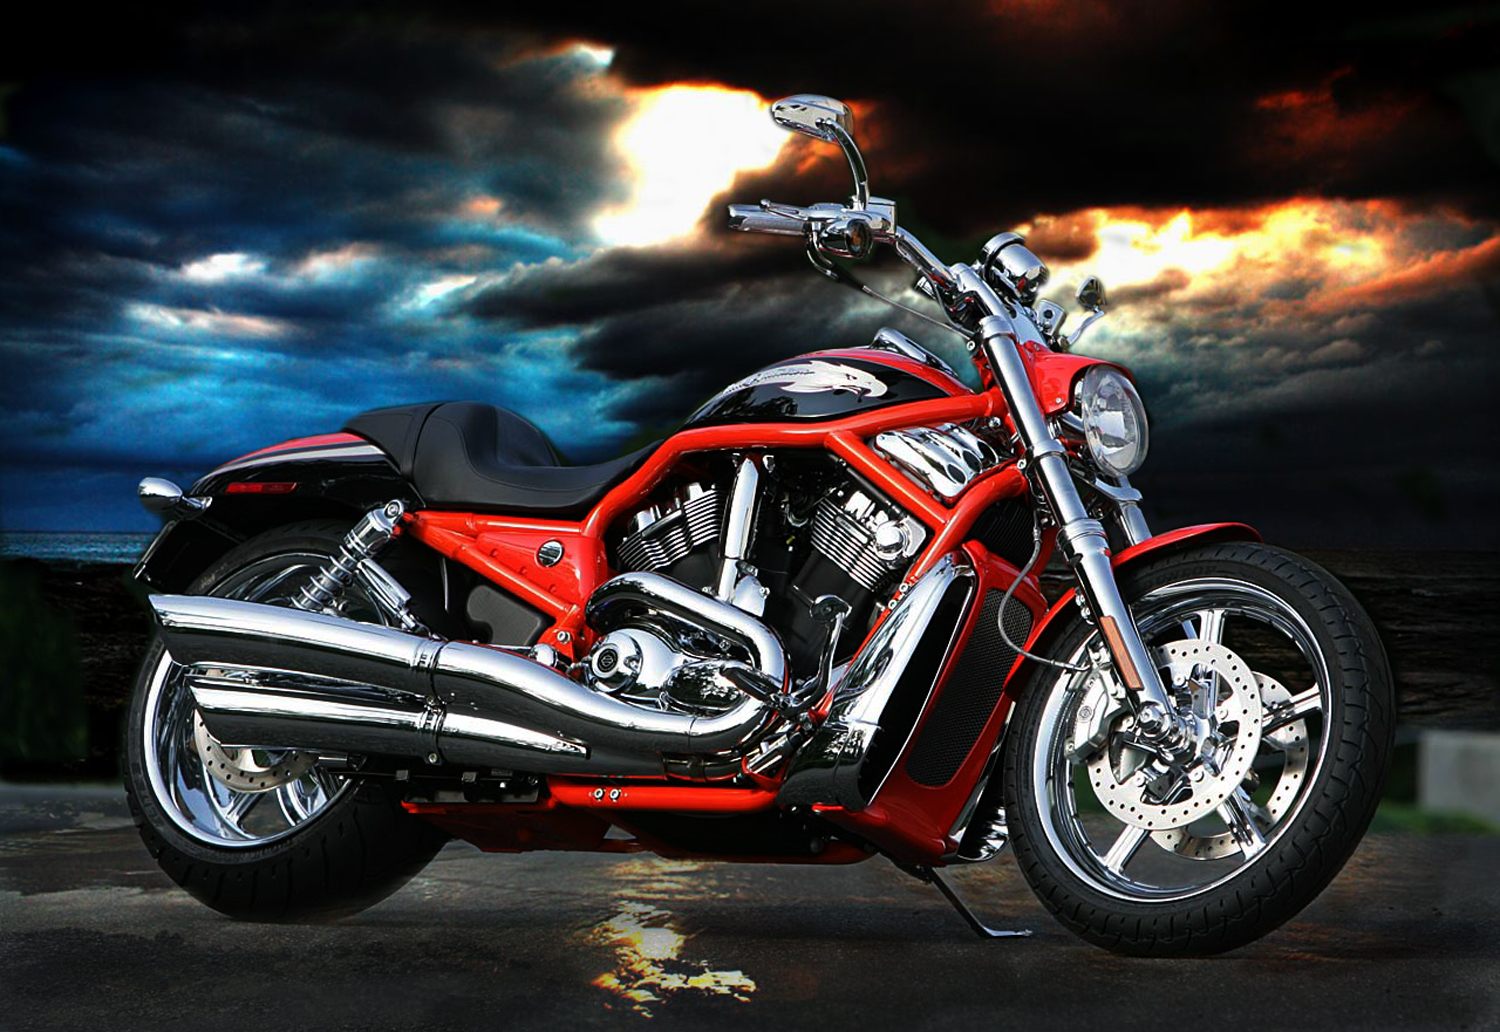 Harley Davidson wallpaper imagens